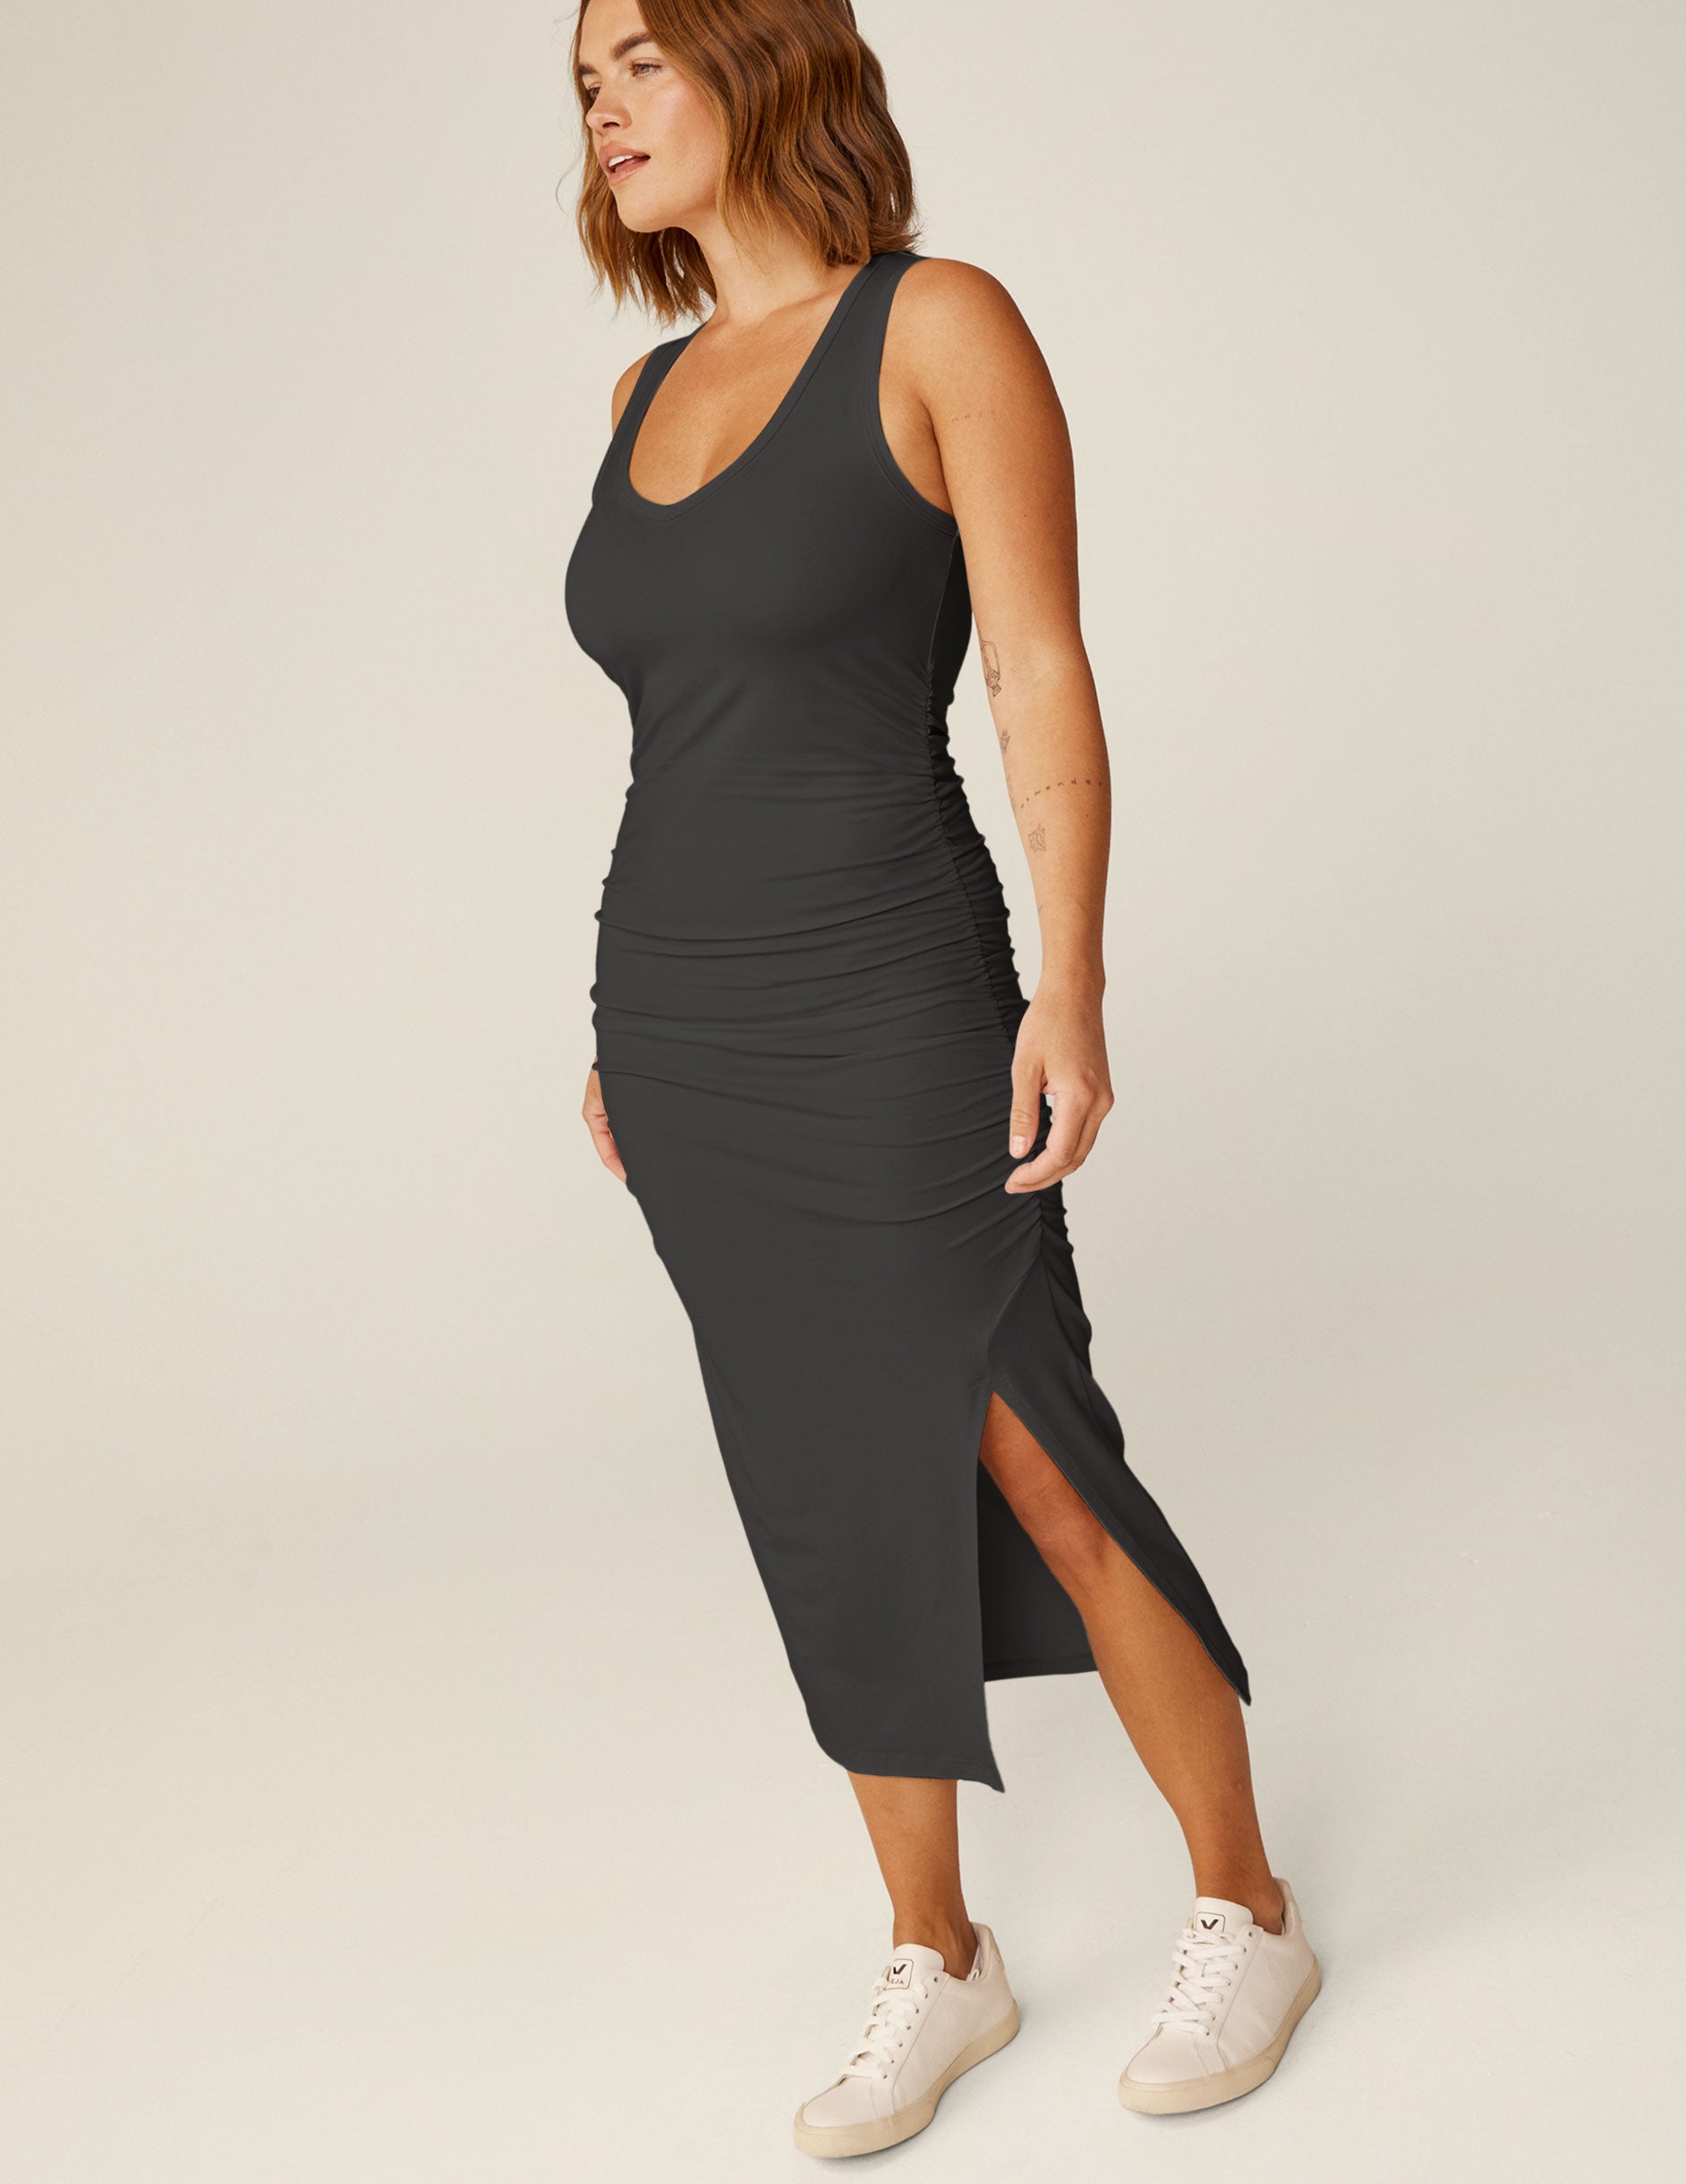 black v-neck midi dress with a front side slit and wide straps.